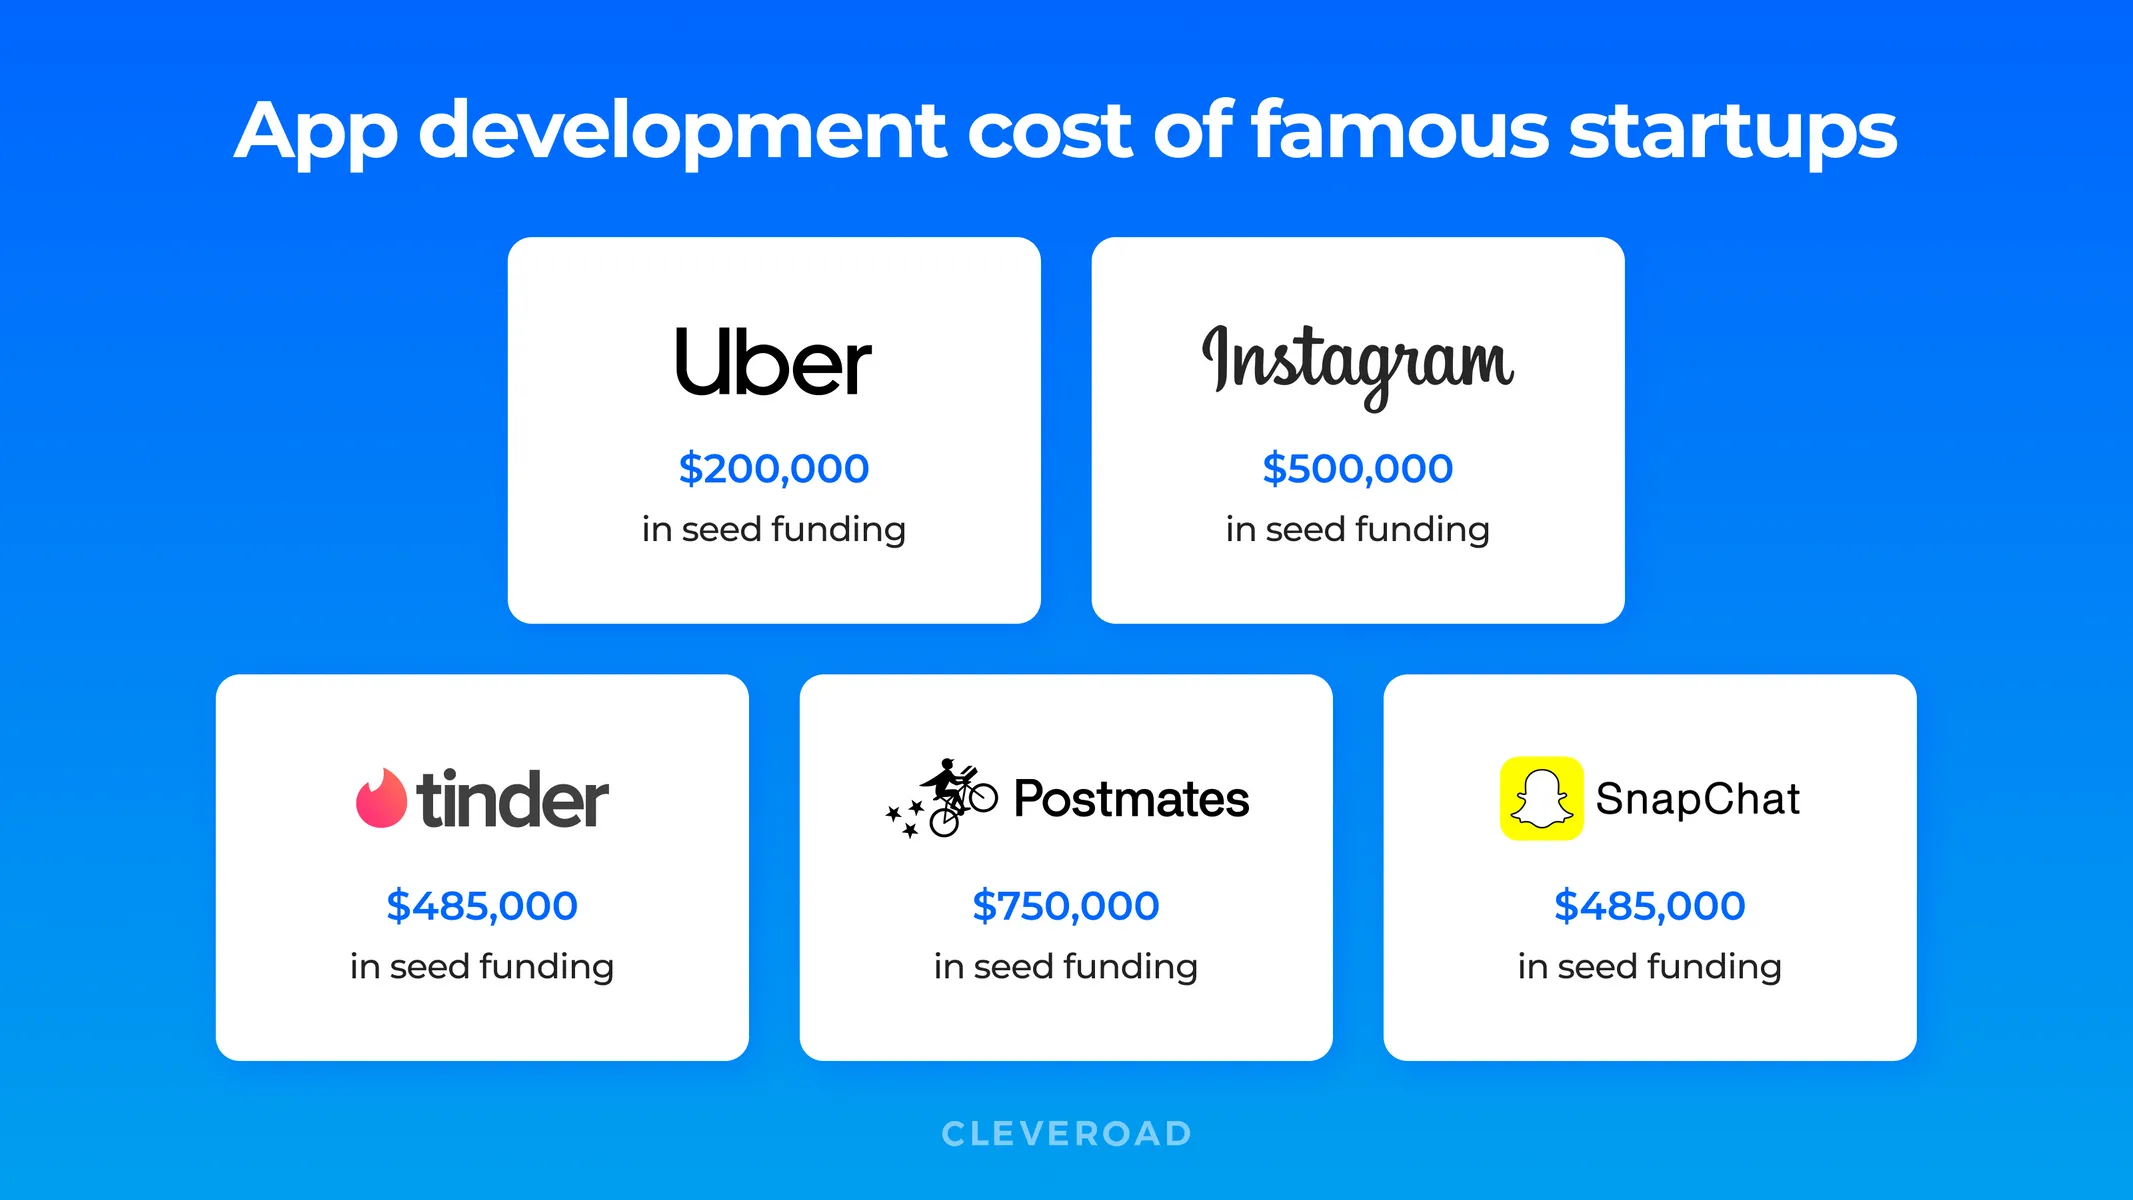 App development cost - famous startups